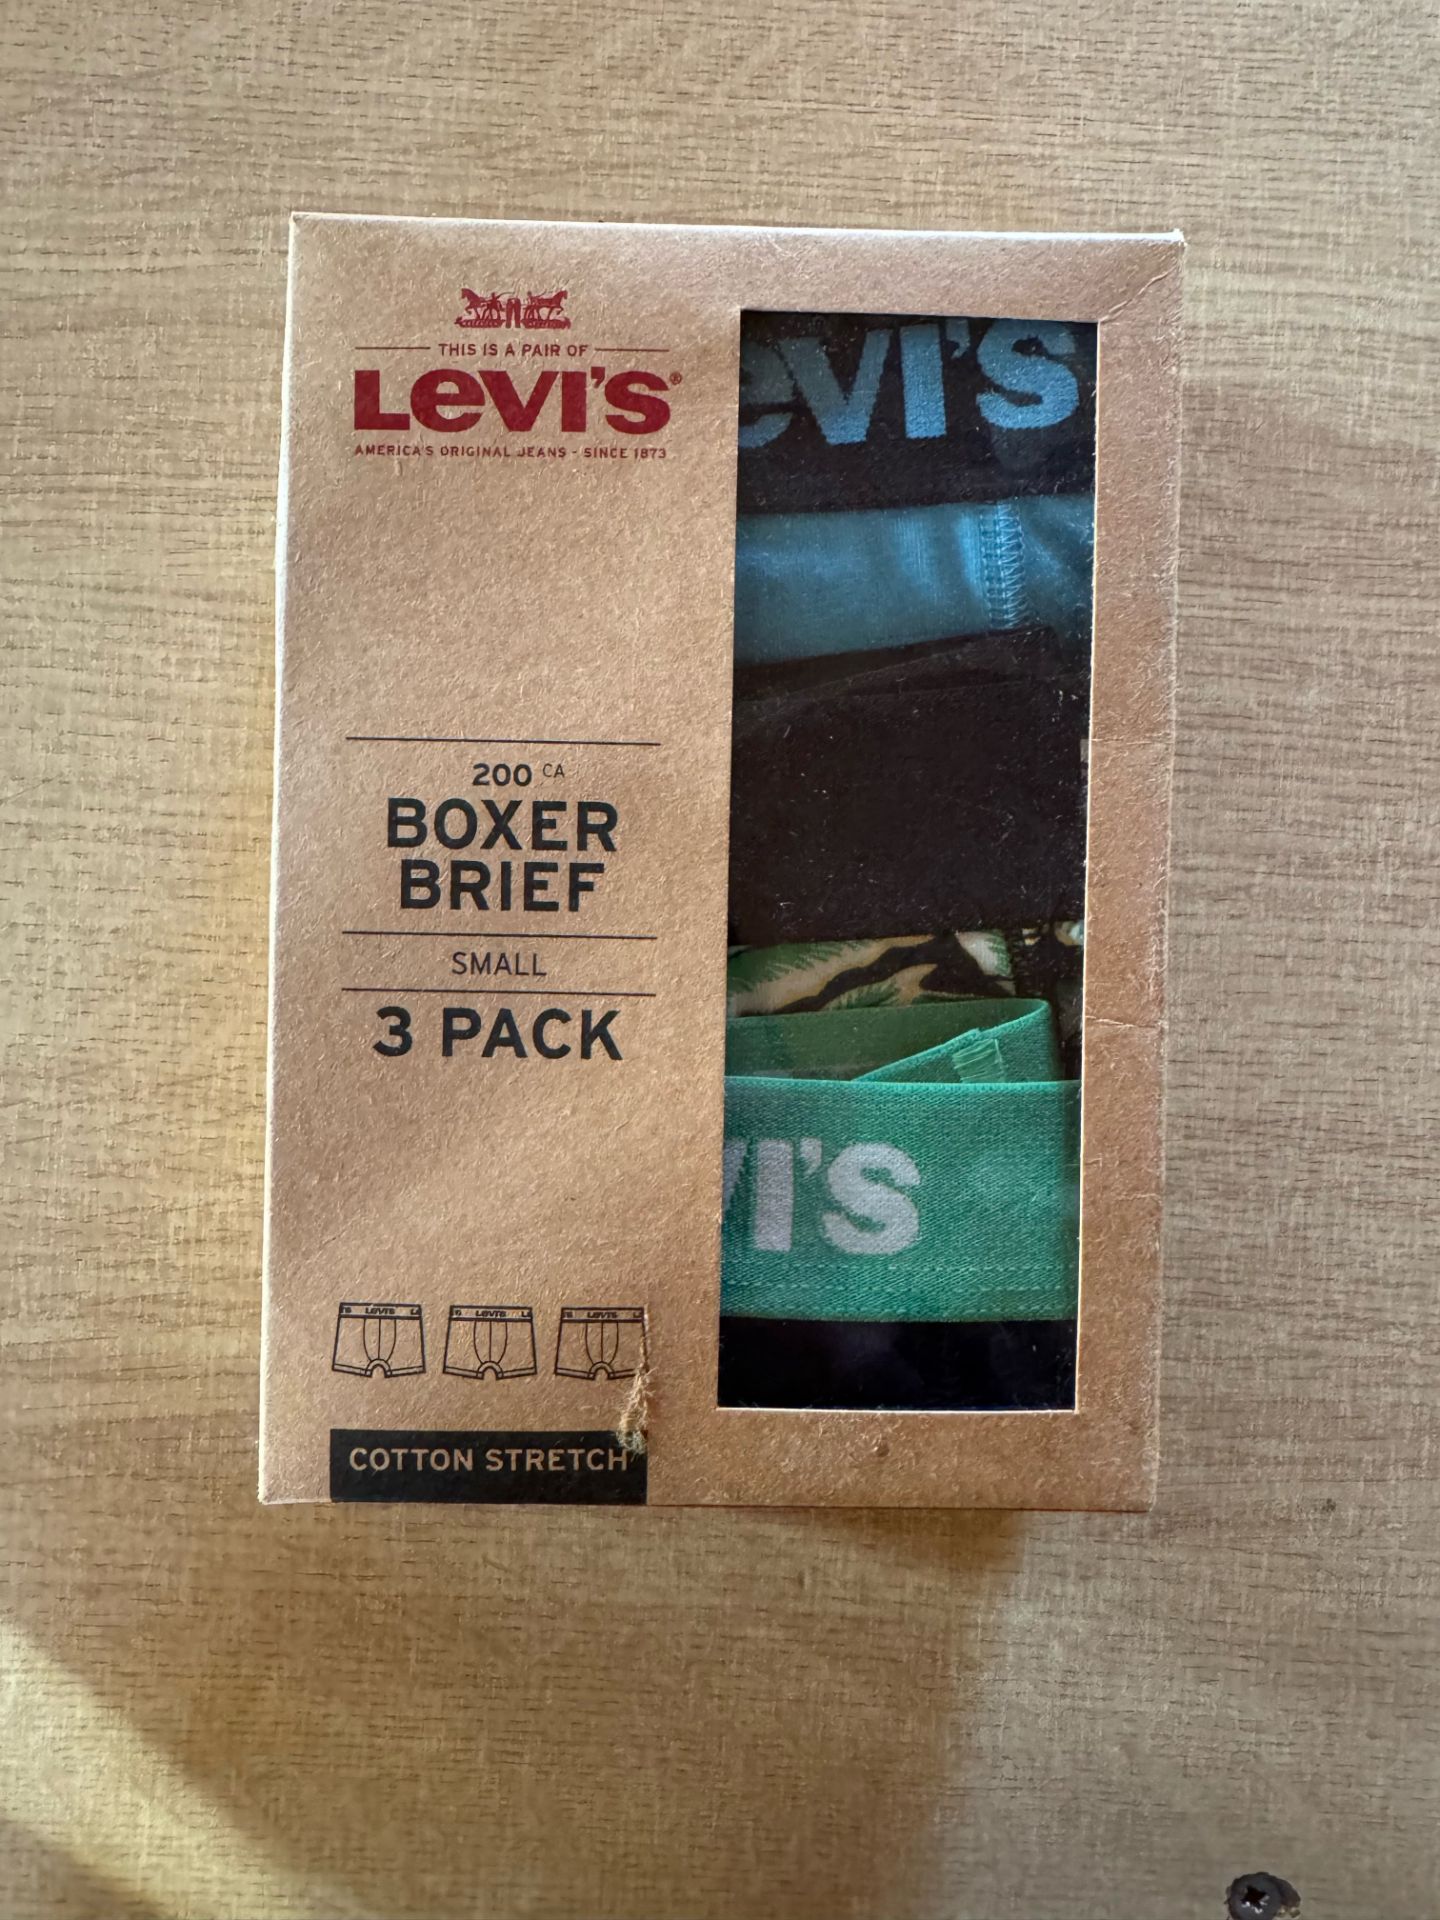 1 x Levi's 200CA Boxer Briefs 3 Pack Hawaiian Print Light Blue Size Small Original Box - Image 2 of 2